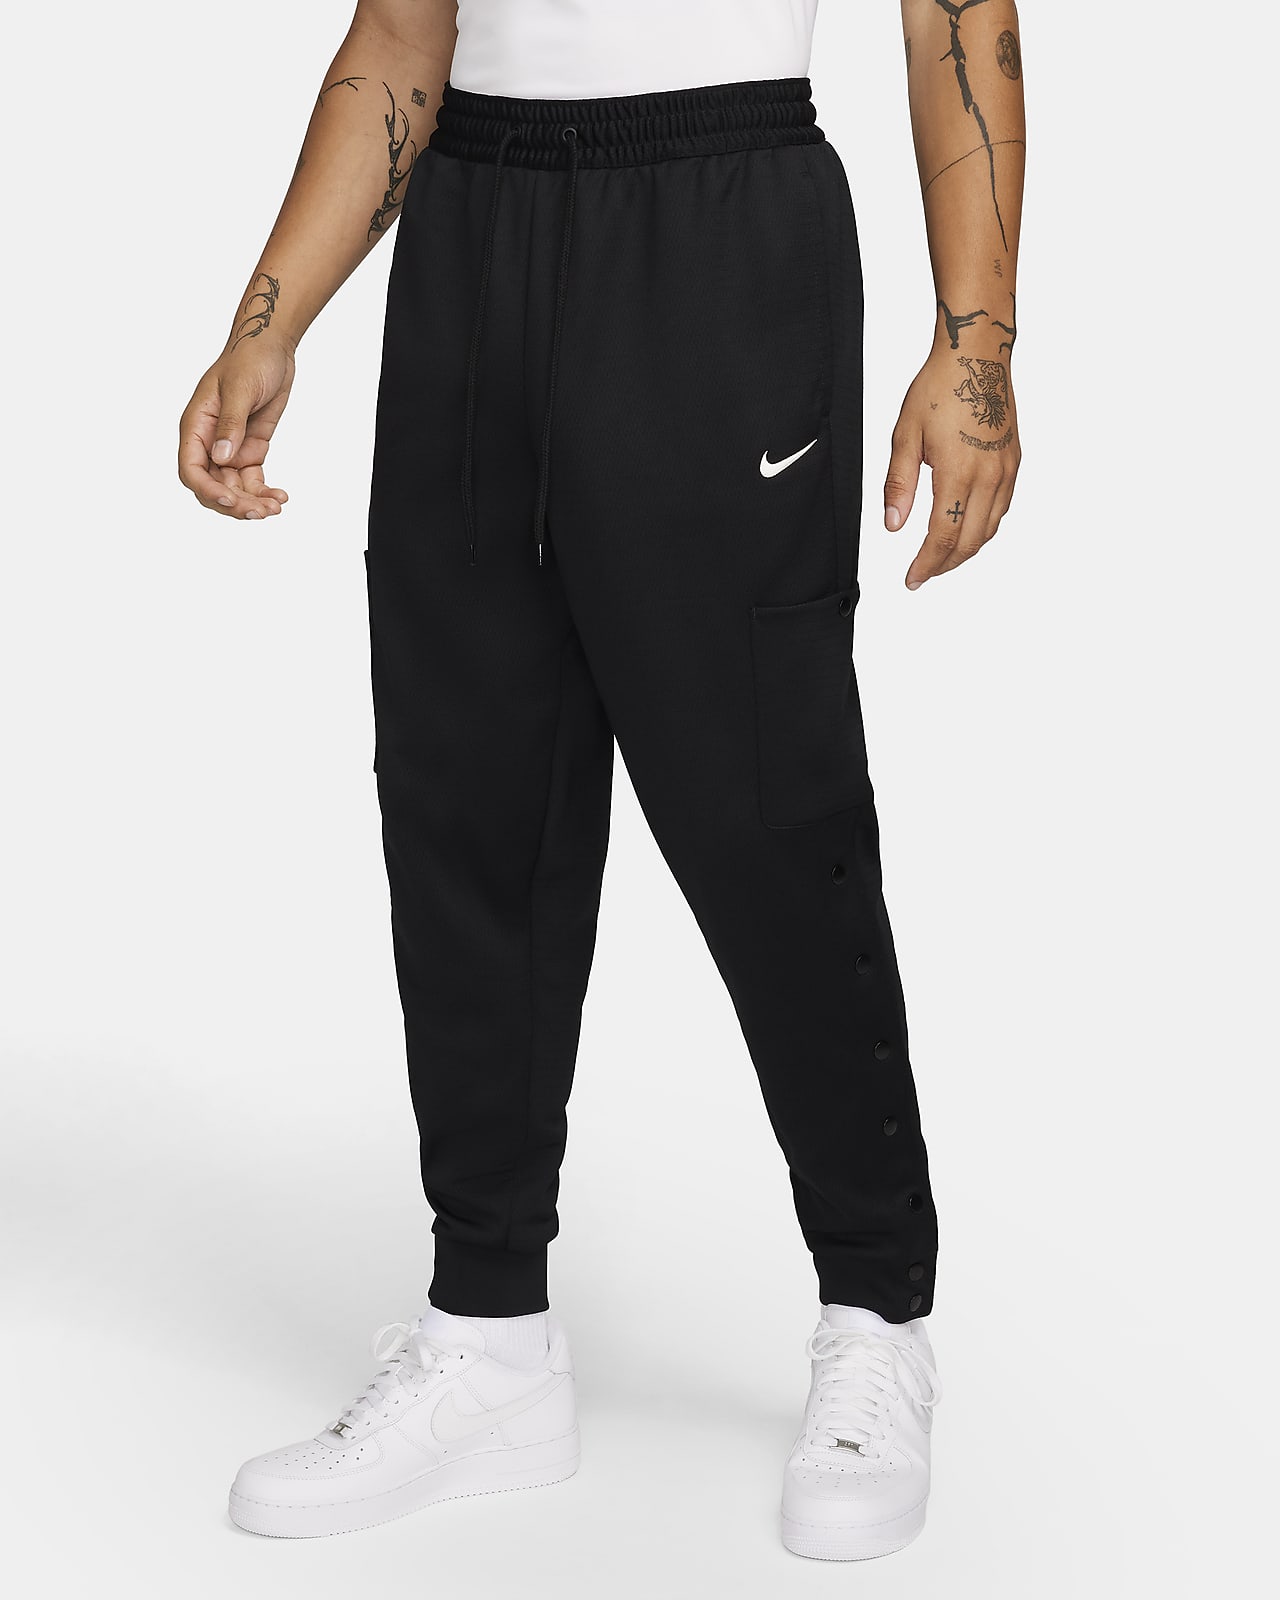 Nike Youth Tee Ball Pants | Dick's Sporting Goods